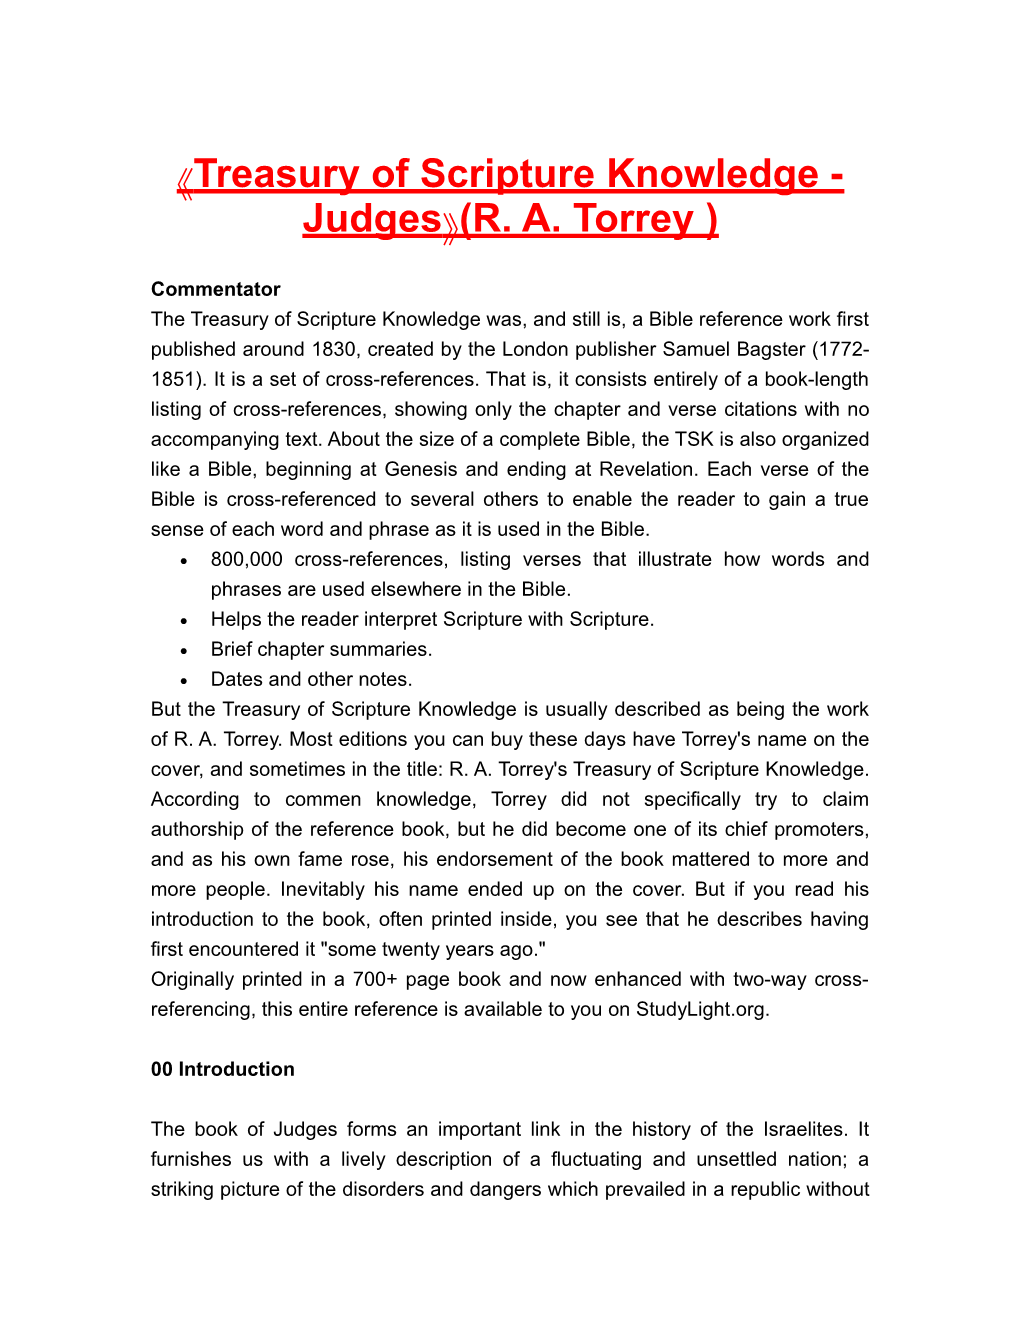 Treasuryofscriptureknowledge - Judges (R. A.Torrey)